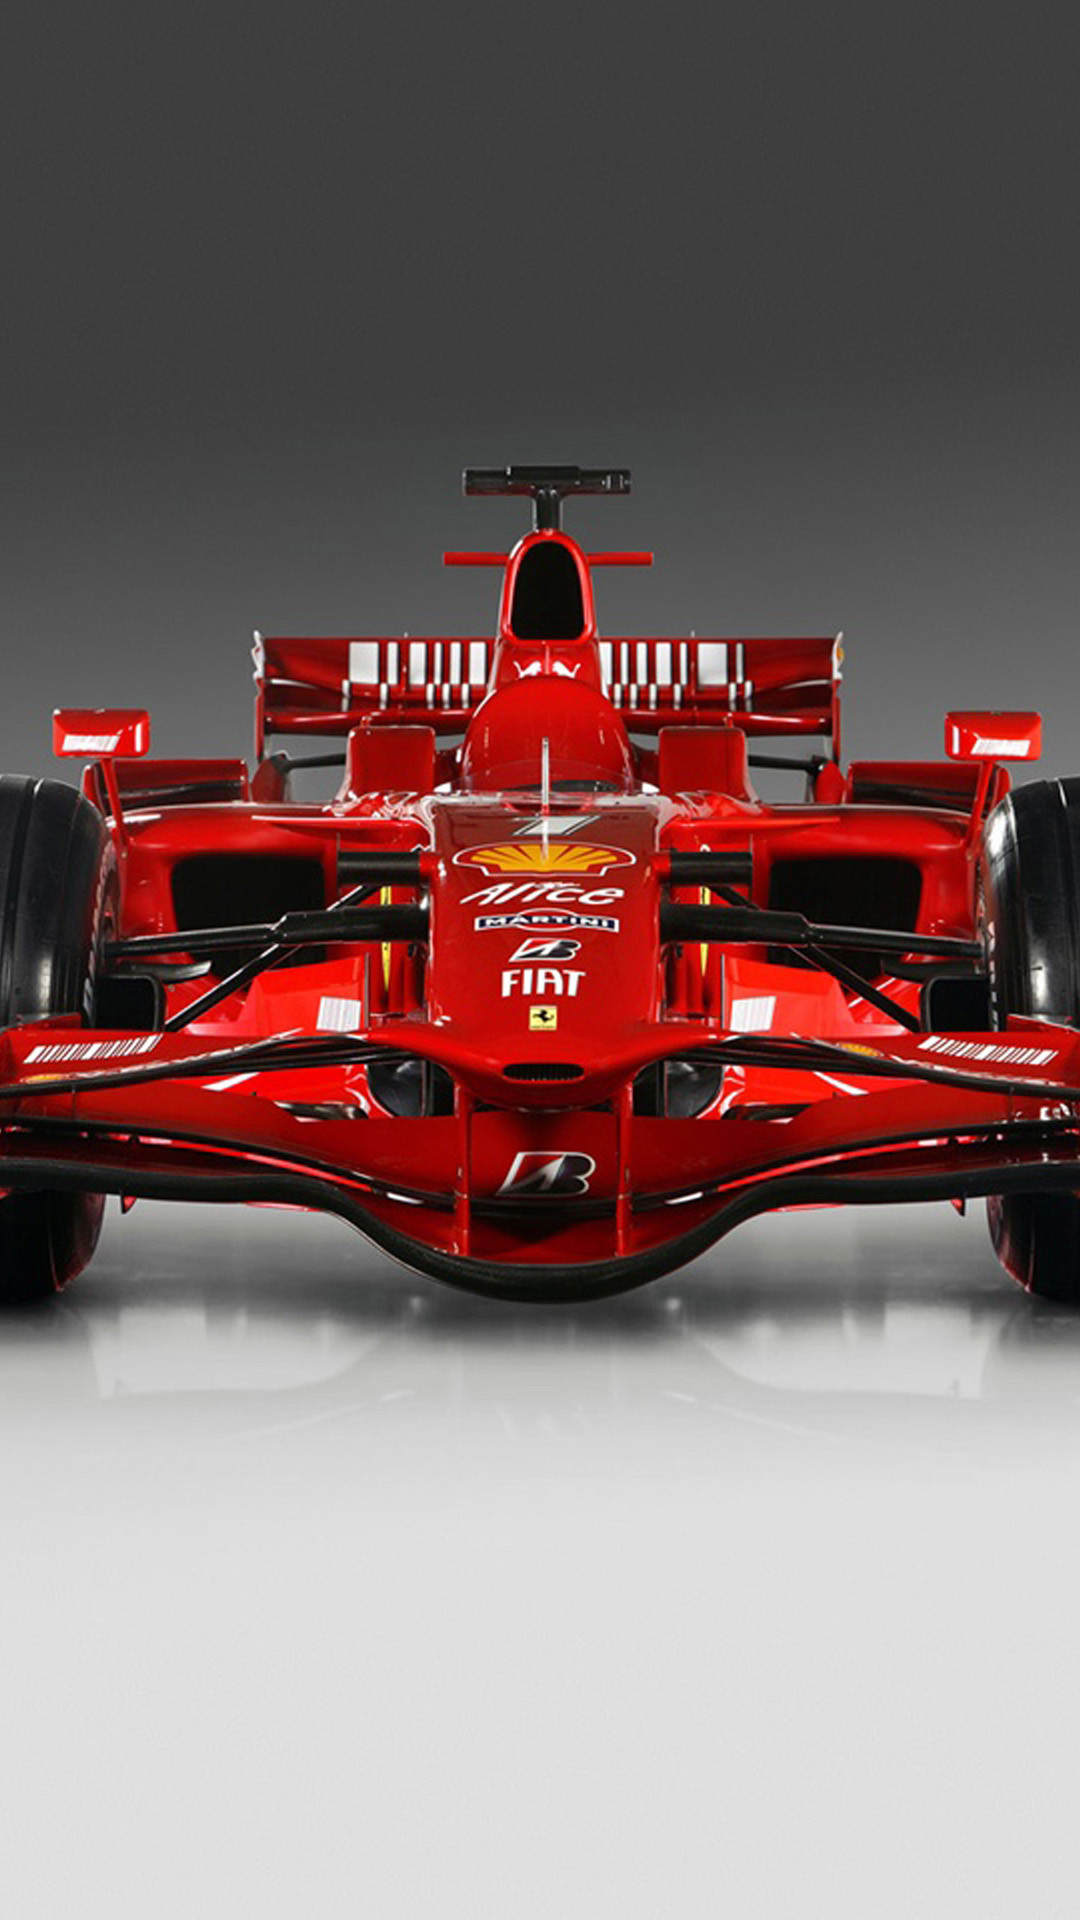 formula 1 iphone wallpaper,formula one car,formula one,formula libre,race car,vehicle